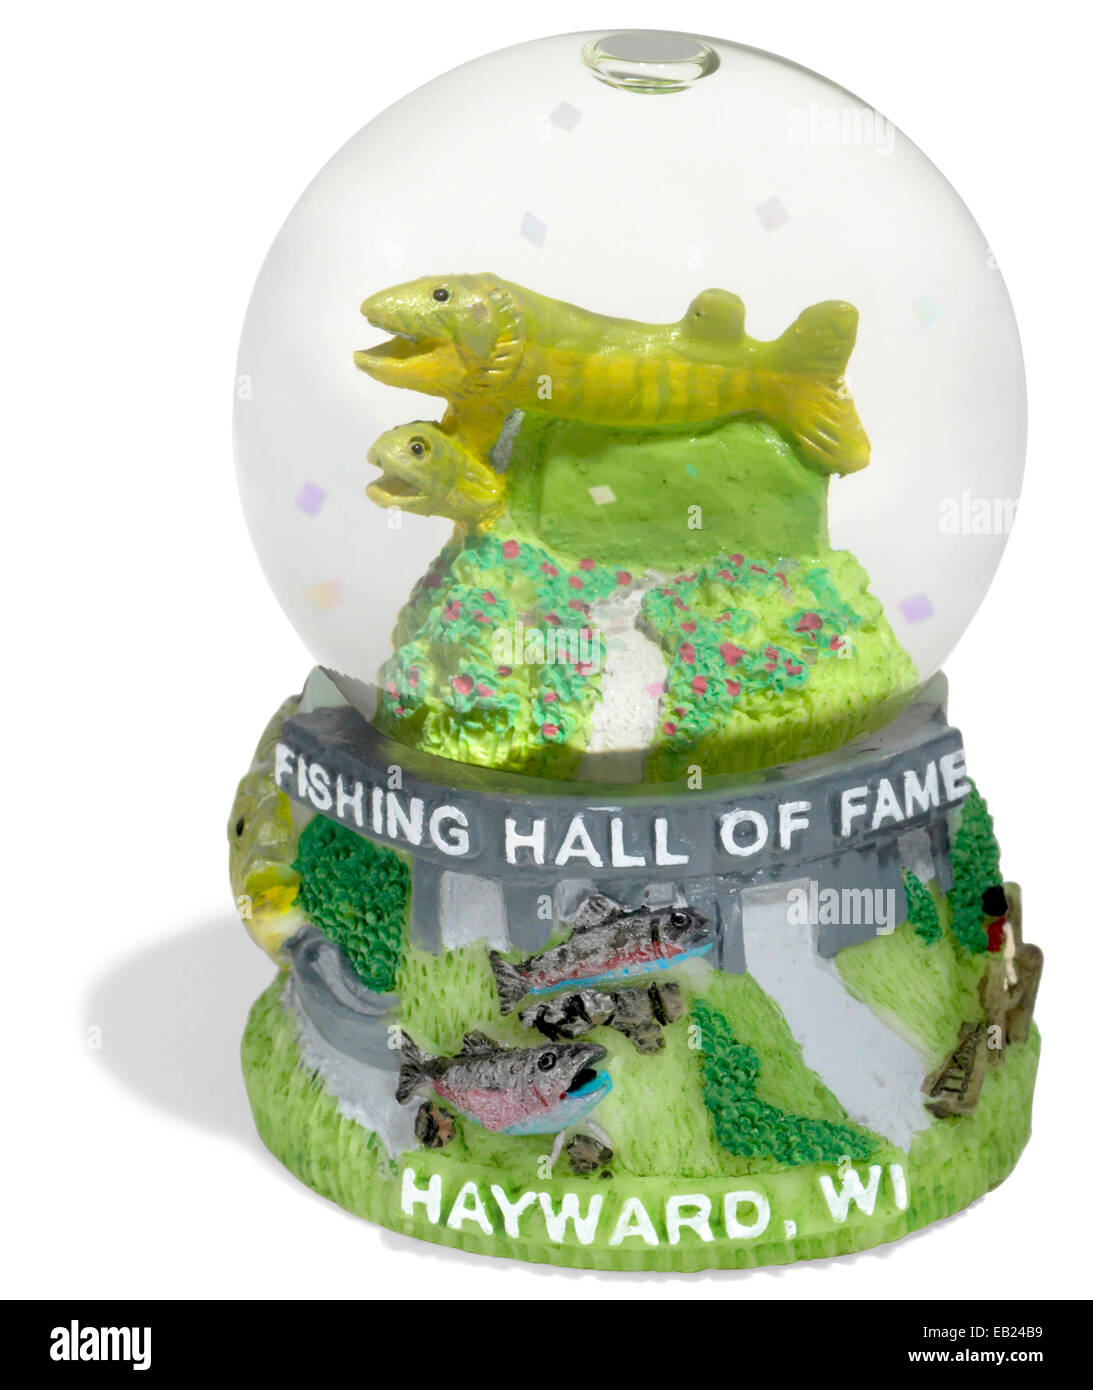 https://c8.alamy.com/comp/EB24B9/fish-snow-globe-from-the-fishing-hall-of-fame-EB24B9.jpg